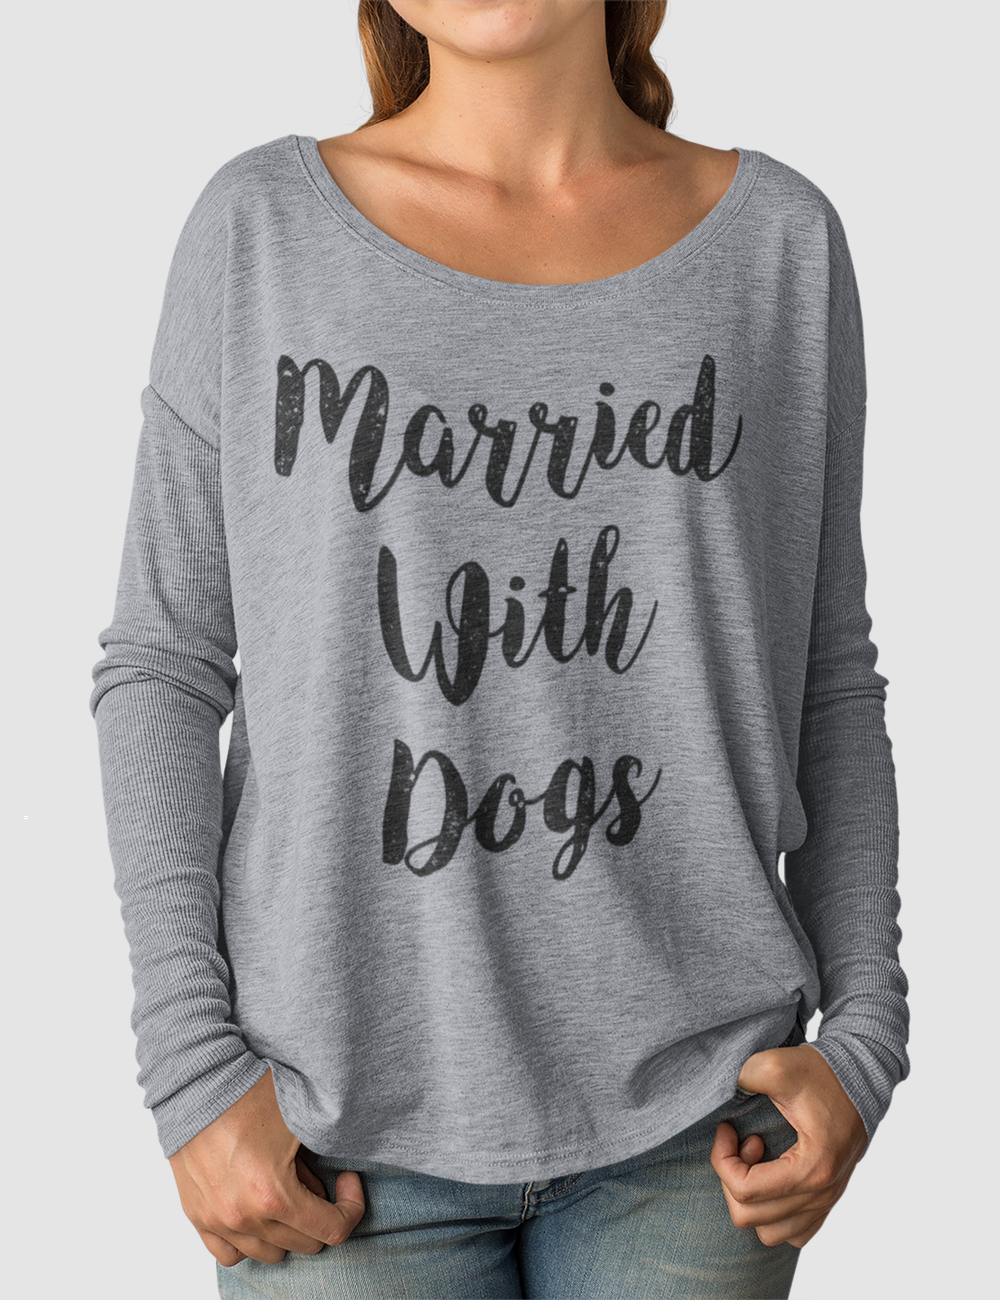 Married With Dogs | Women's Flowy Long Sleeve Shirt OniTakai